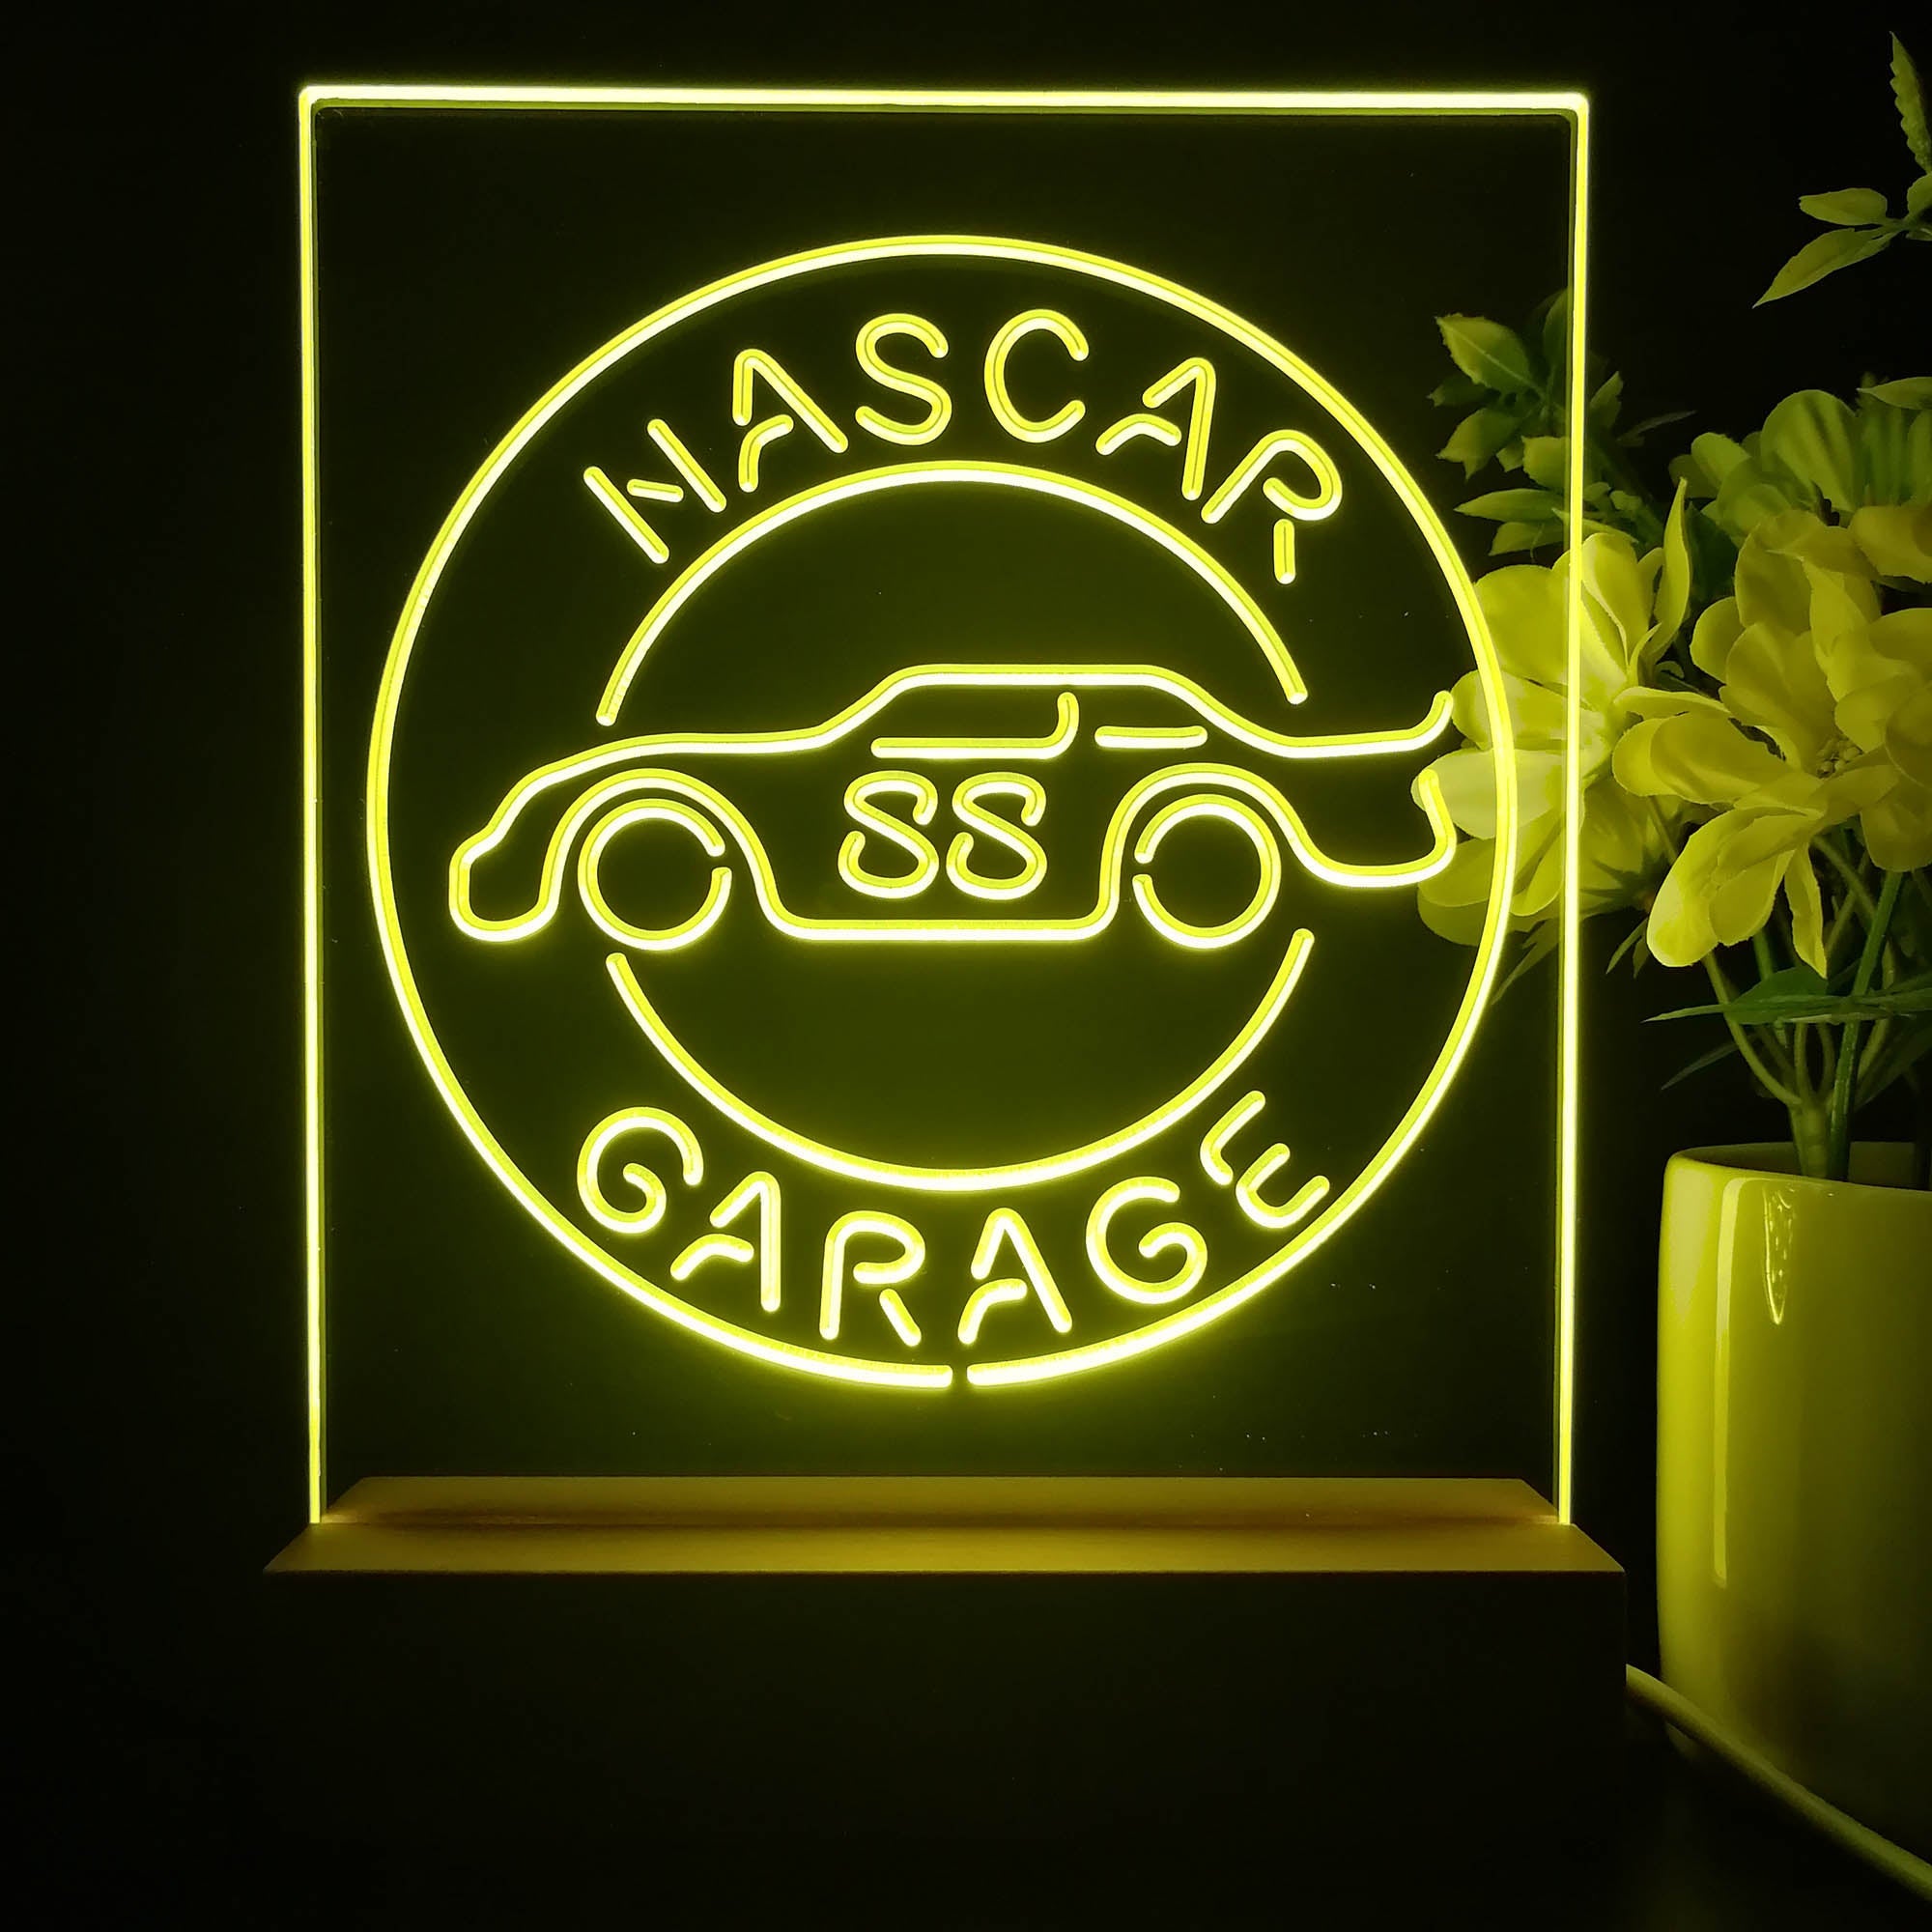 Nascar 88 Garage Dale Jr. Neon Sign Table Top Lamp